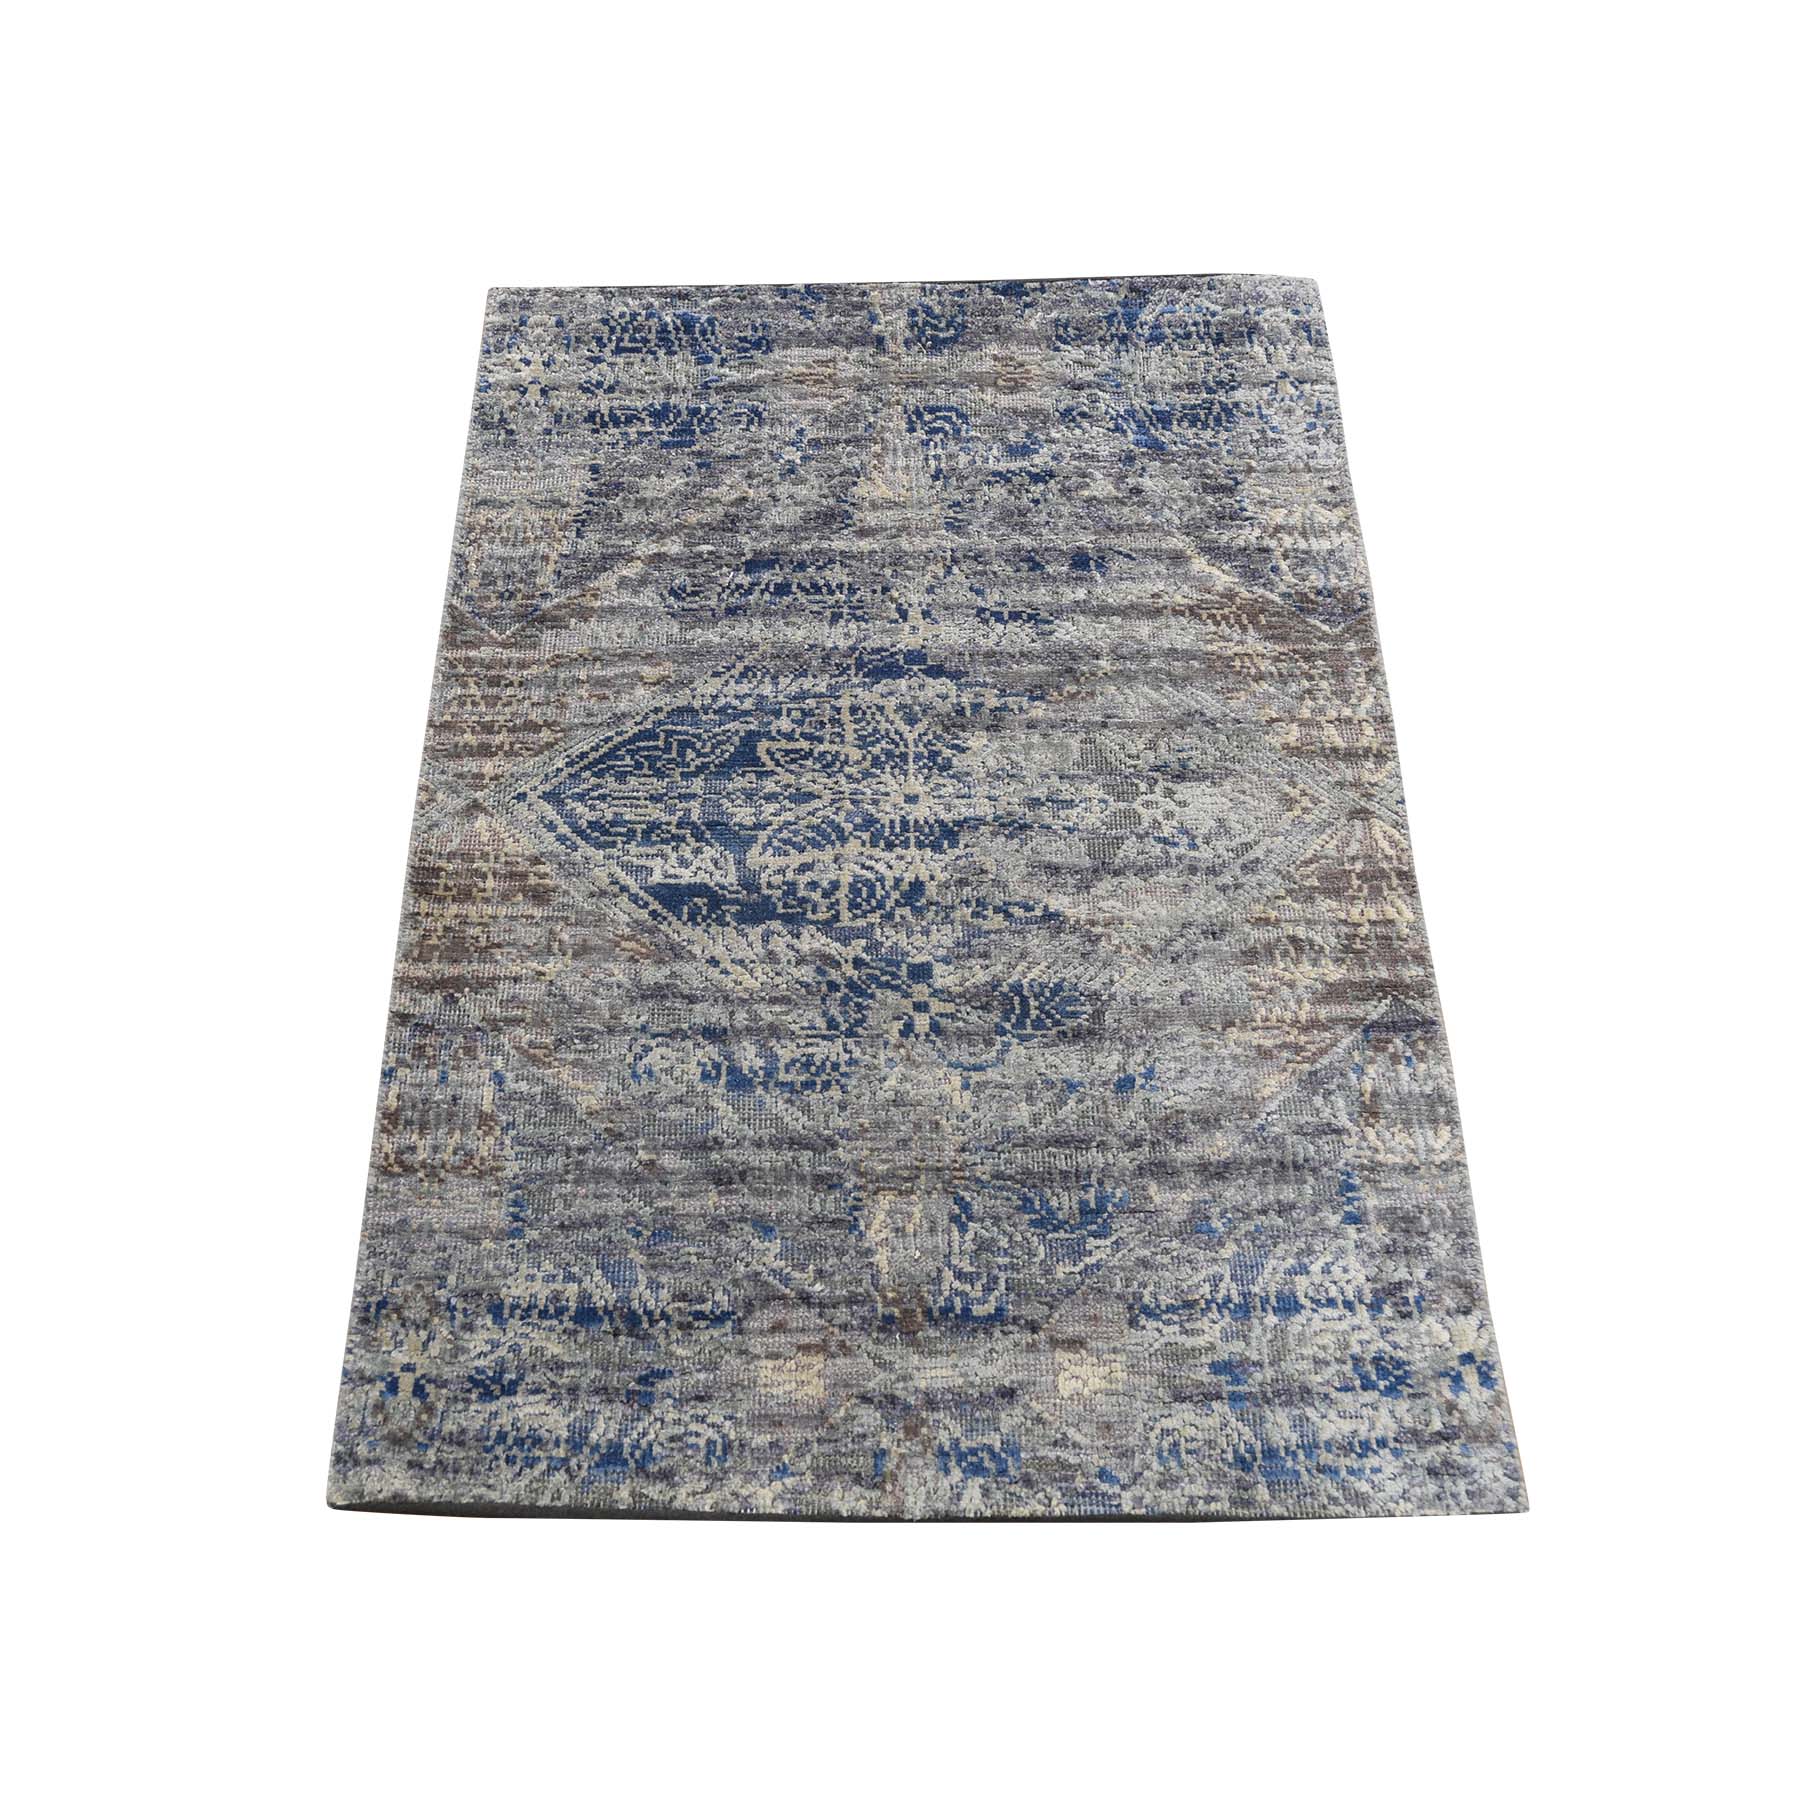 2'x3' ERASED ROSSETS,Silk With Textured Wool Denim BluE Hand Woven Oriental Sample Rug 